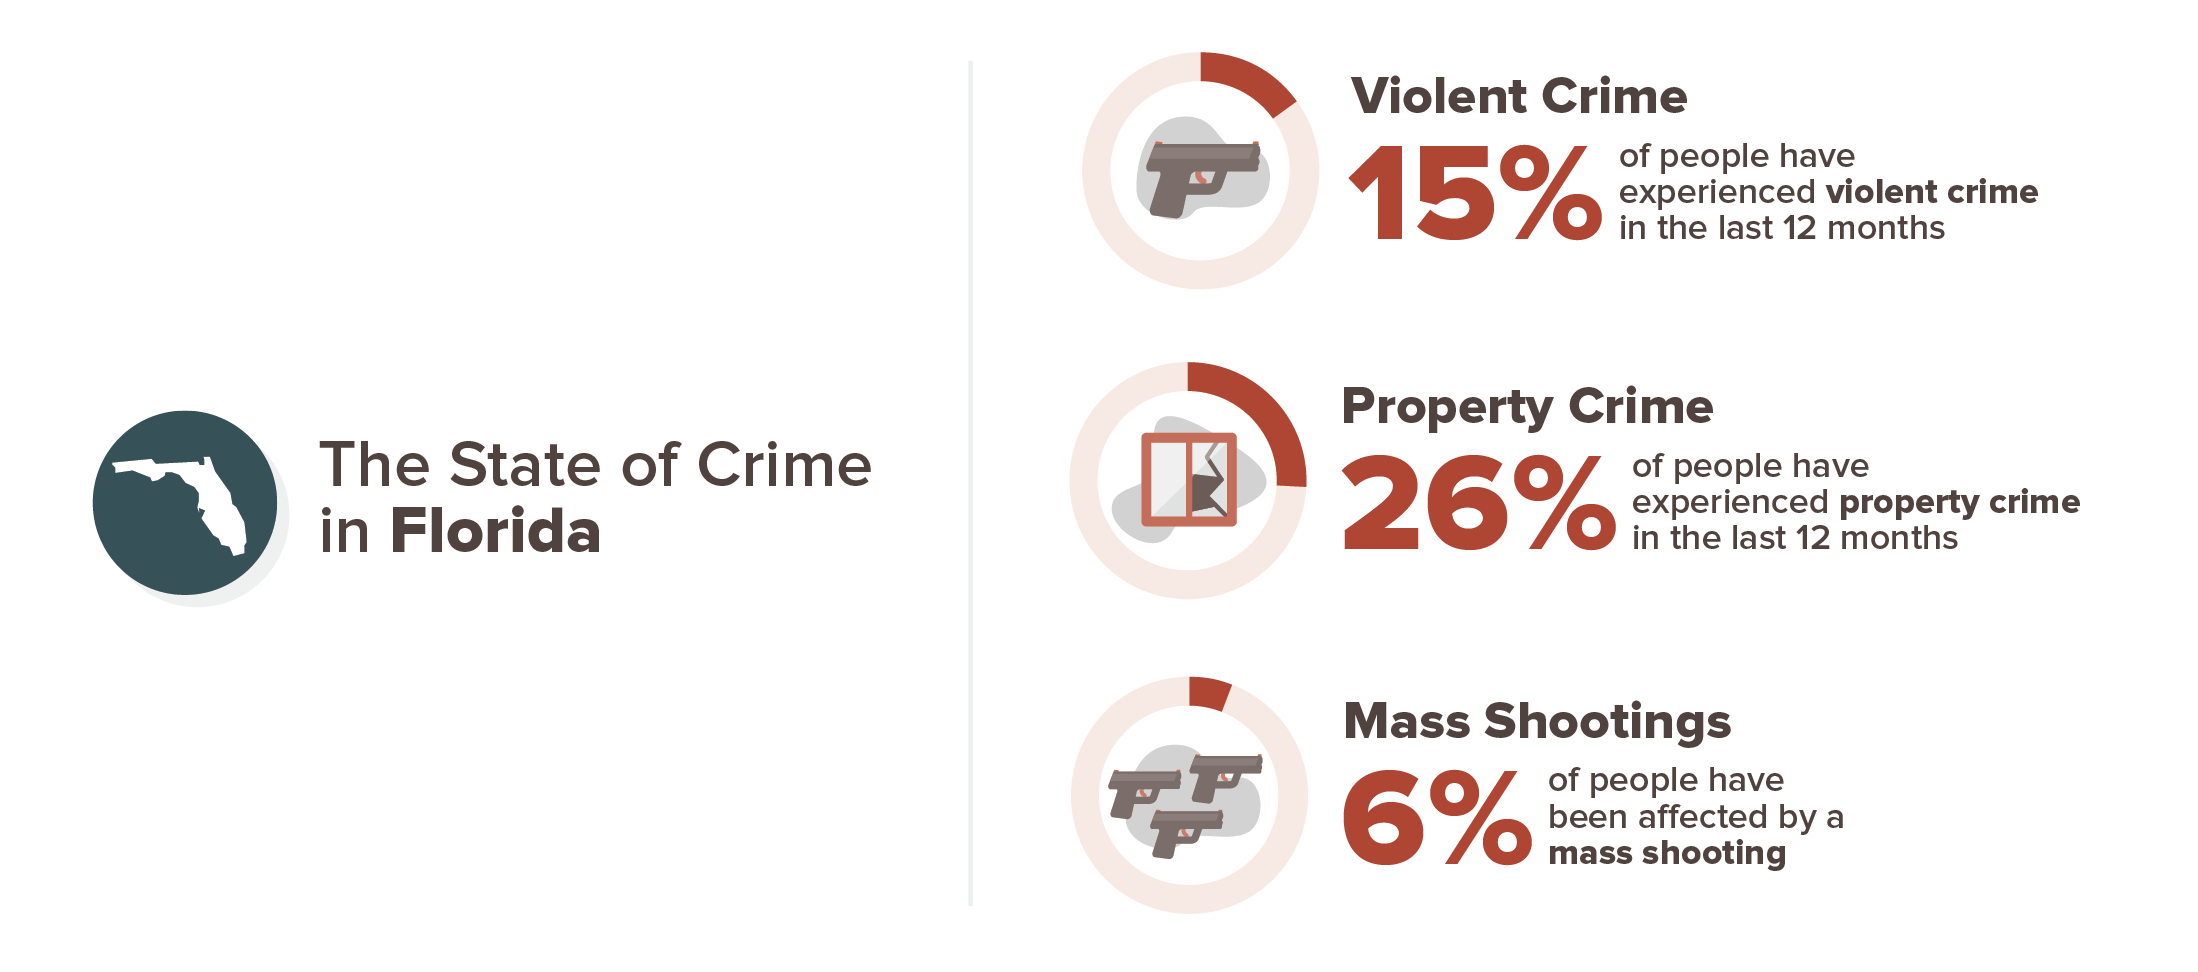 Florida crime experience infographic; 15% violent crime, 26% property crime, 6% mass shooting